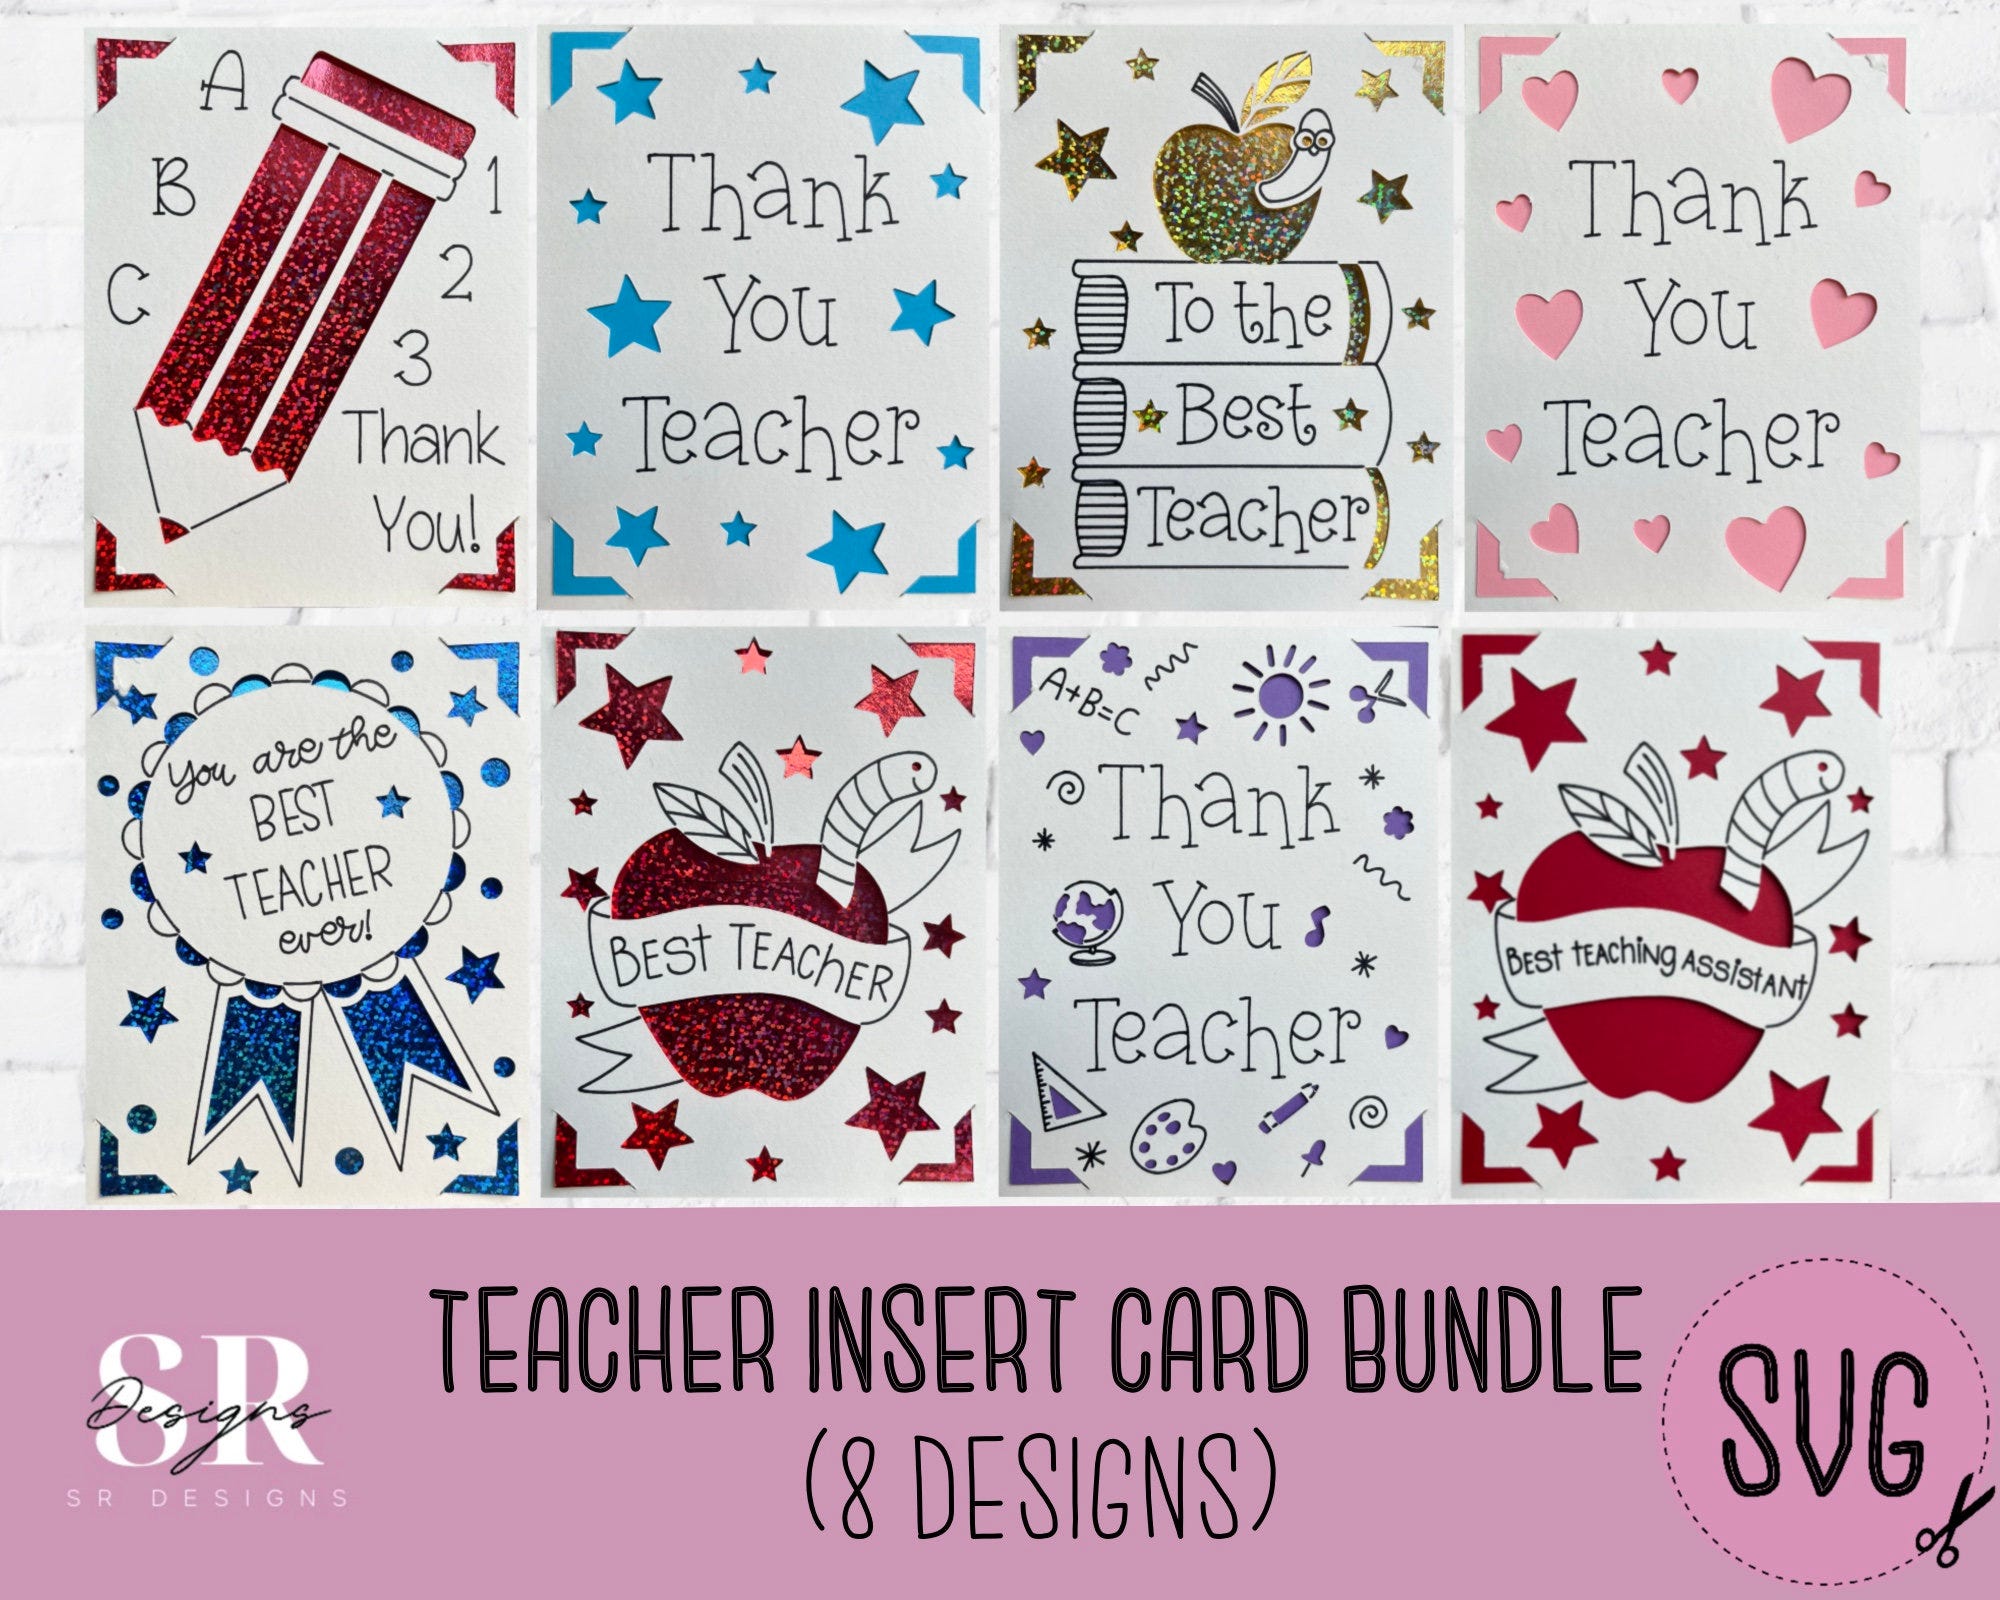 SVG: Teacher insert card bundle. 8 designs. Paper cutting. Thank you teacher card svg. Teacher appreciation. Cricut joy teacher card bundle.